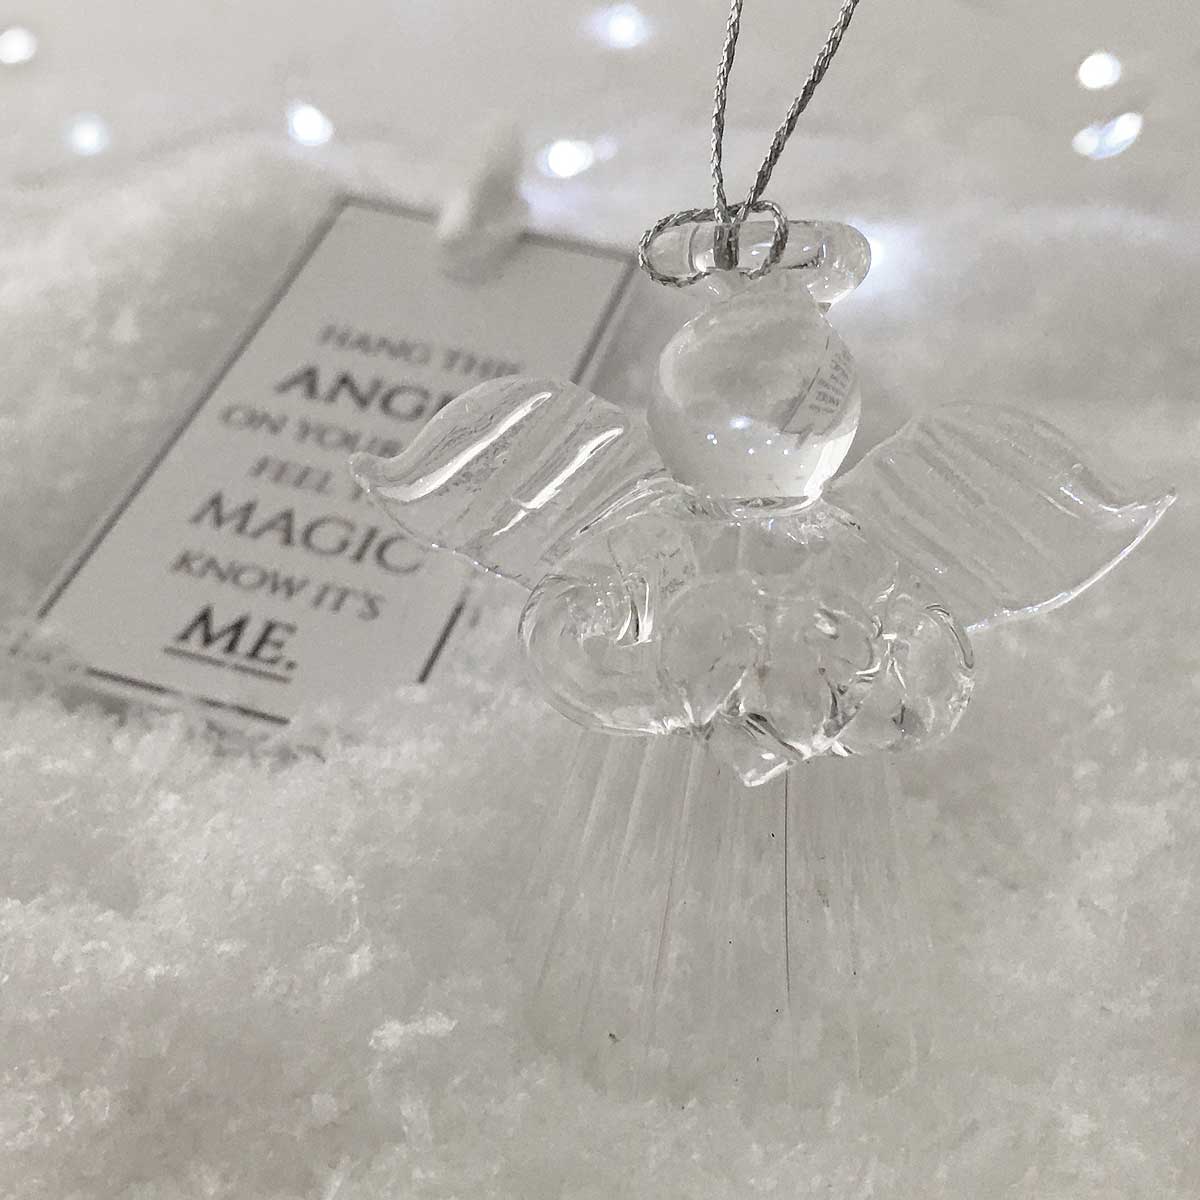 Glass Angel Hanging Ornament